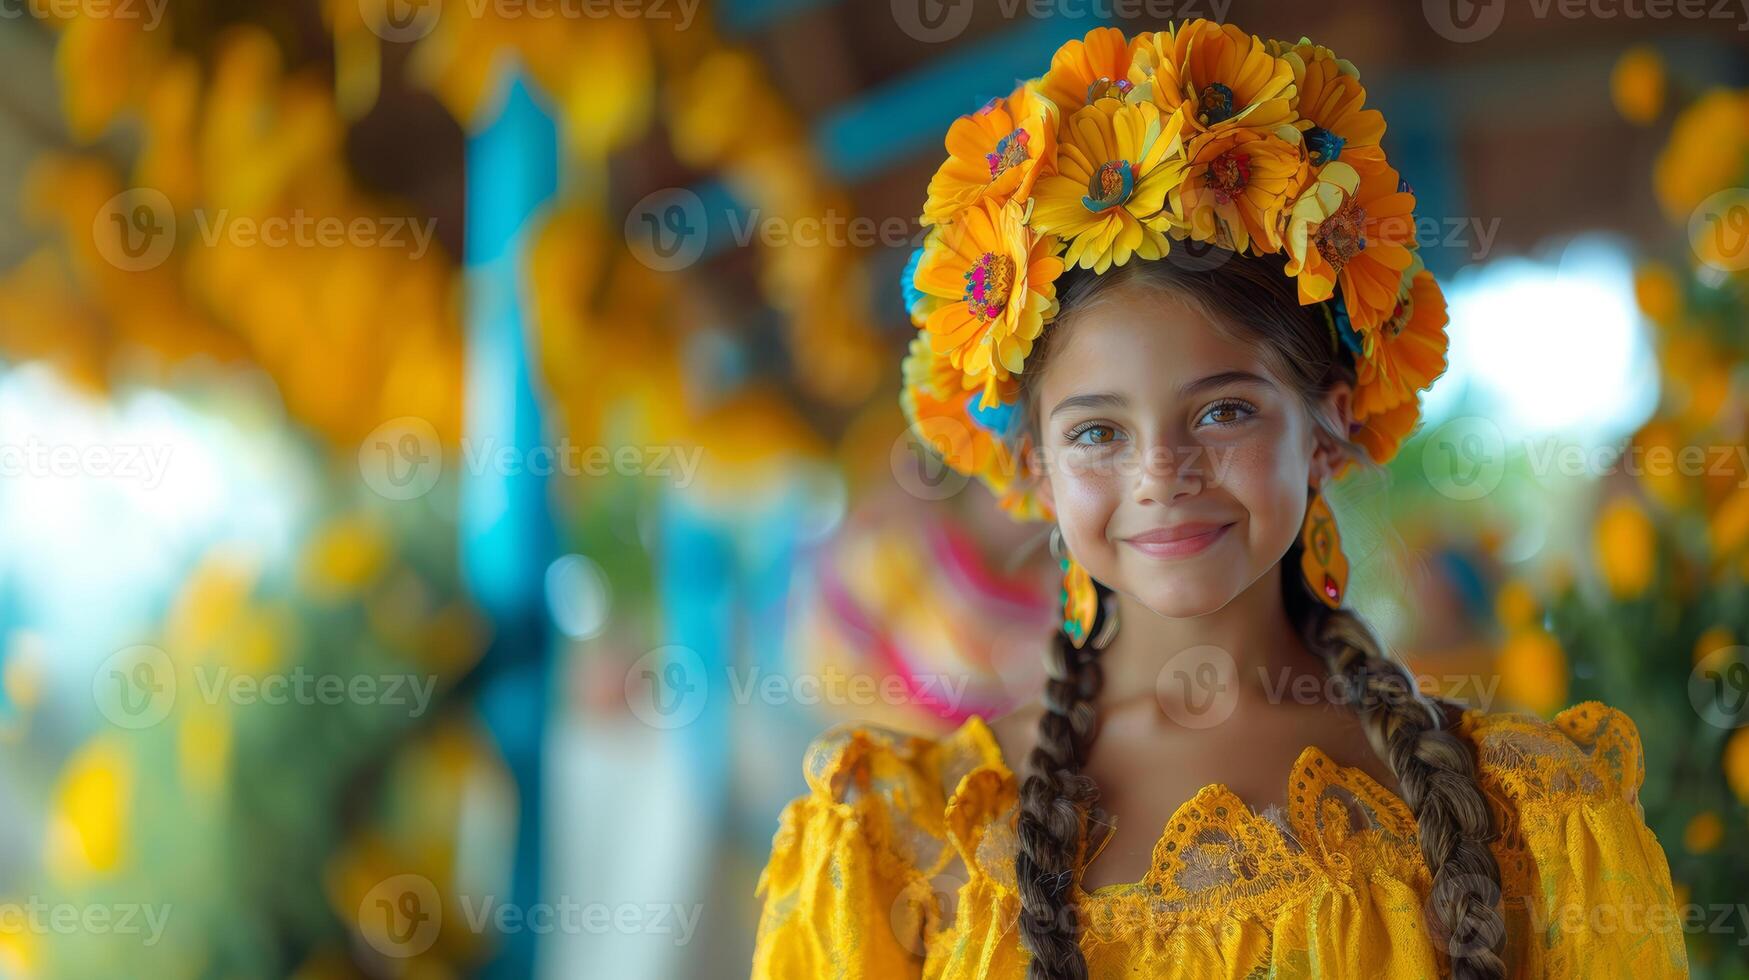 jovem menina dentro vibrante amarelo vestir a comemorar festa junina foto